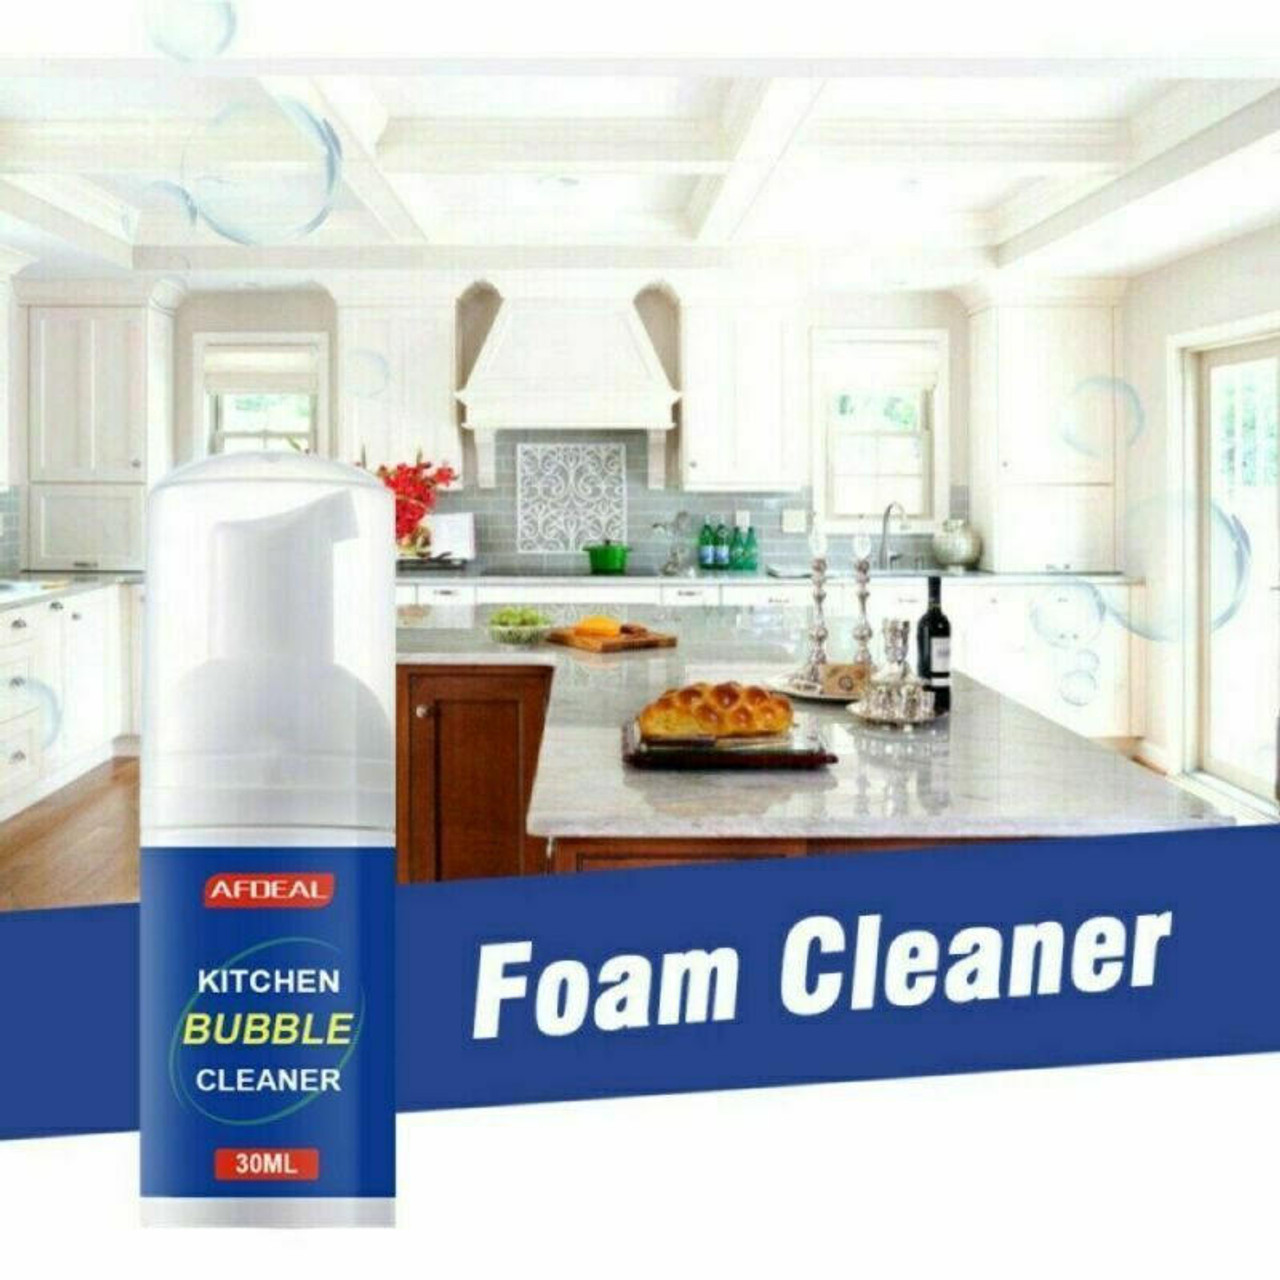 Bubble Cleaner Foam Spray, Super Magic Stain Removal Foam Cleaner, Bubble Cleaner Foam, All Purpose Cleaning Foam, All Purpose Bubble Cleaner Foam (